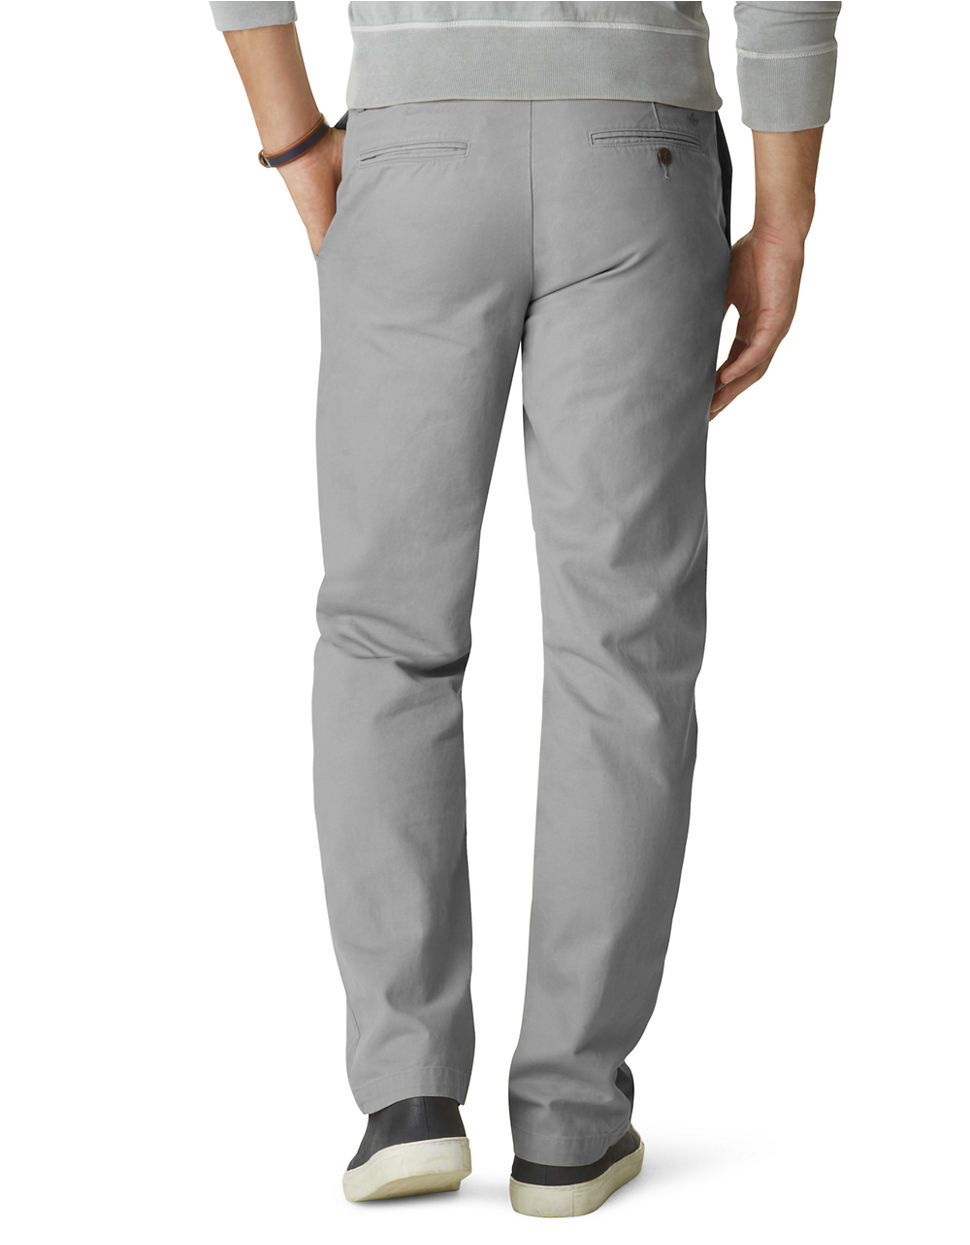 Dockers Classic Fit Limestone Twill Pants in Gray for Men - Lyst